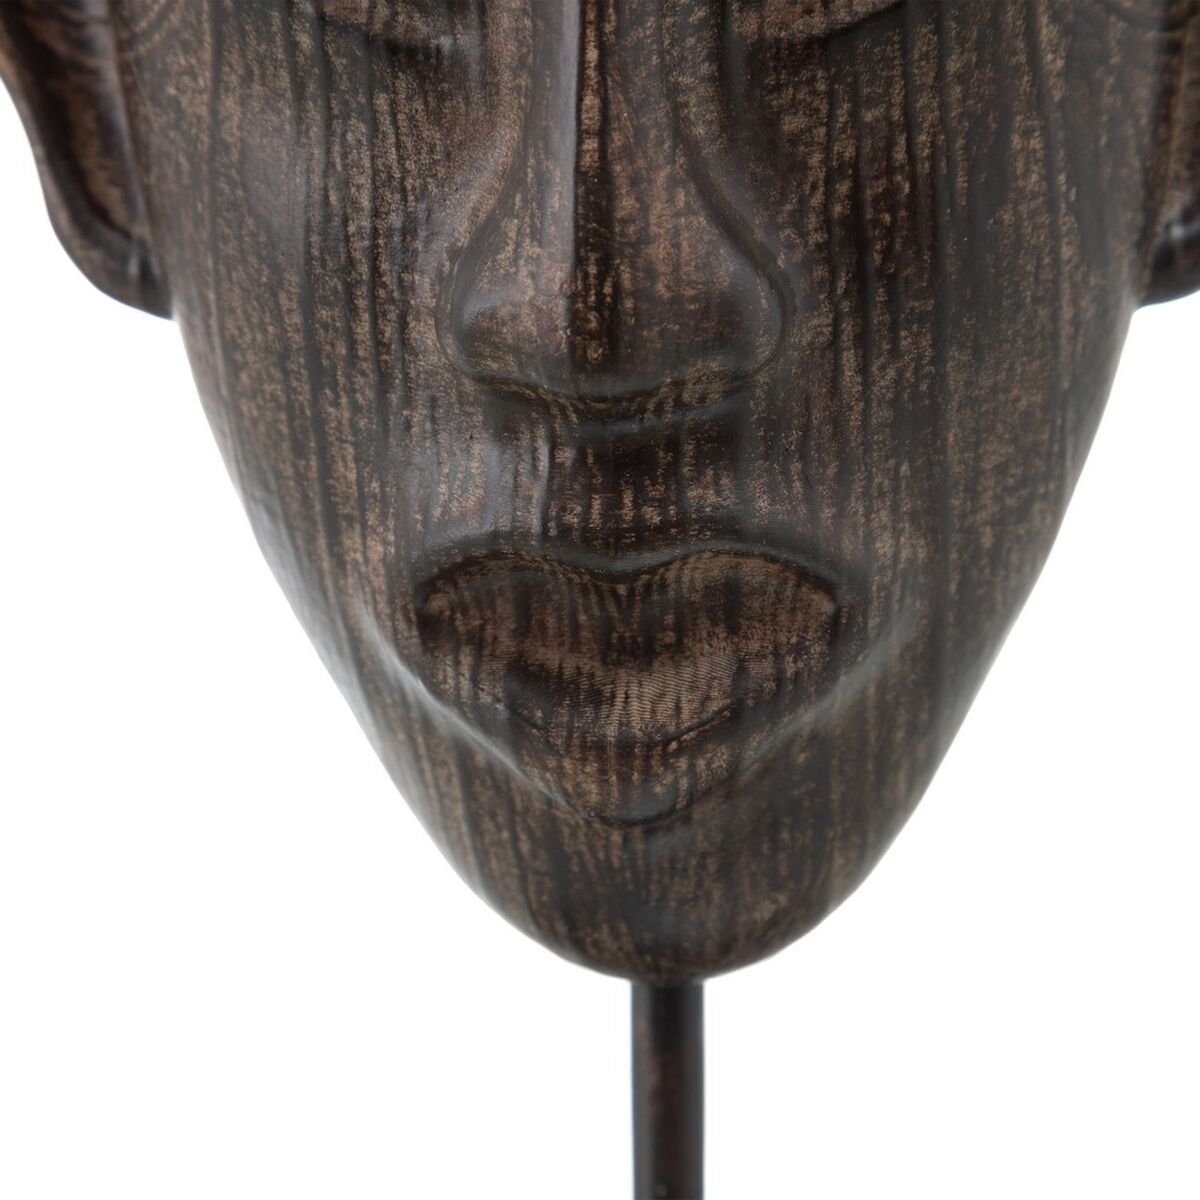 Afrikai férfi fej 17 x 16 x 46 cm